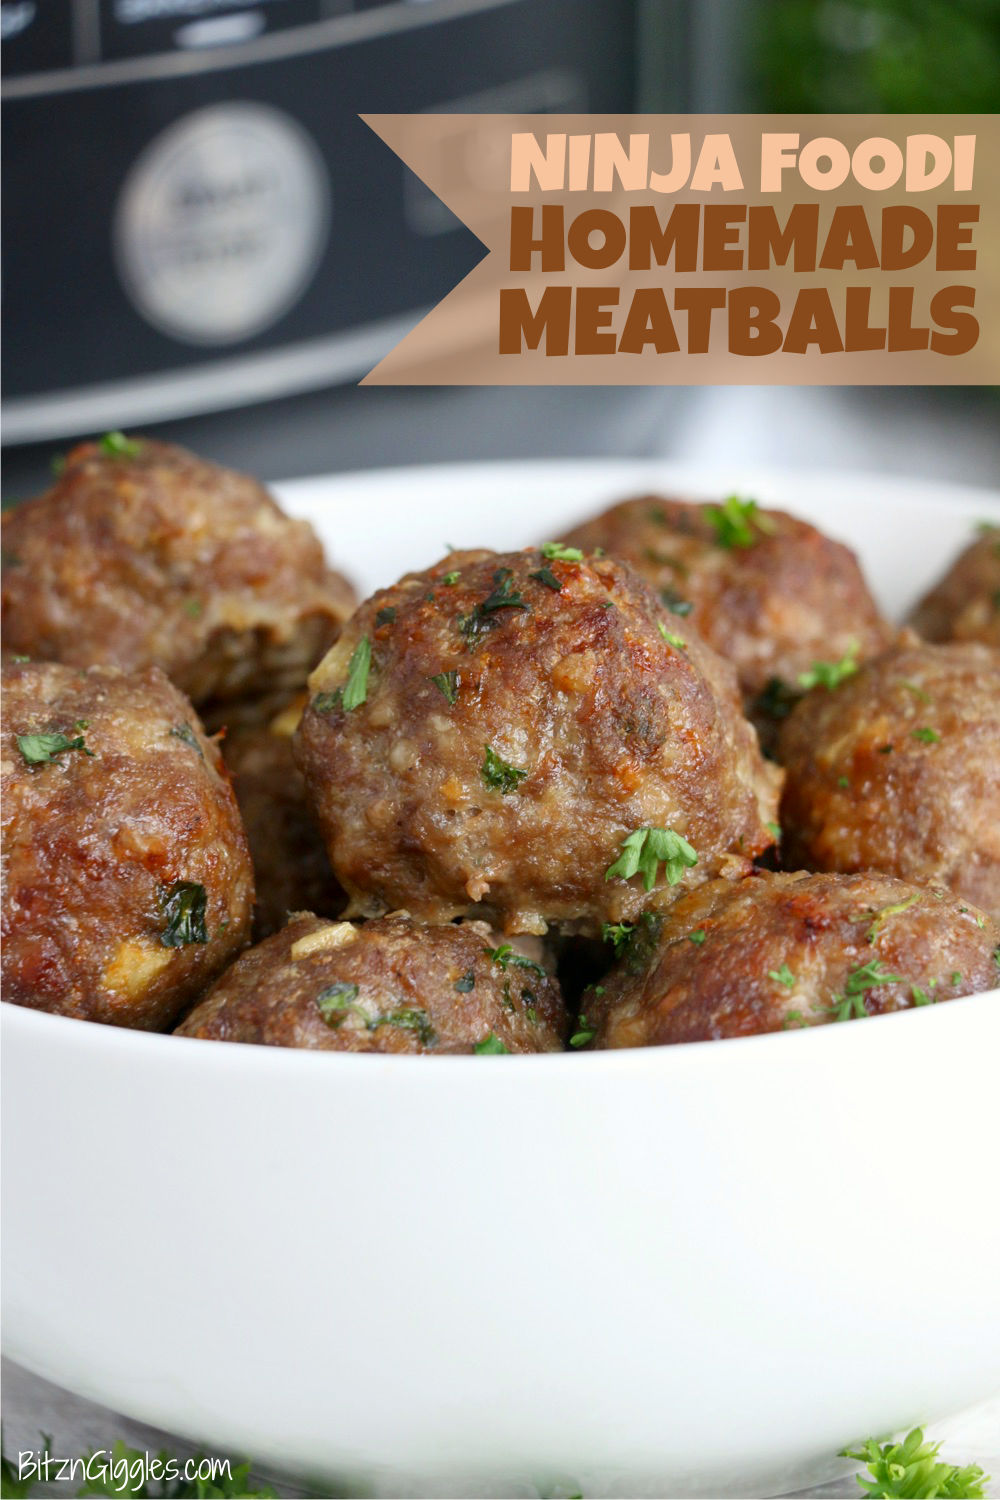 https://bitzngiggles.com/wp-content/uploads/2021/02/Ninja-Foodi-Homemade-Meatballs-Pinterest.jpg